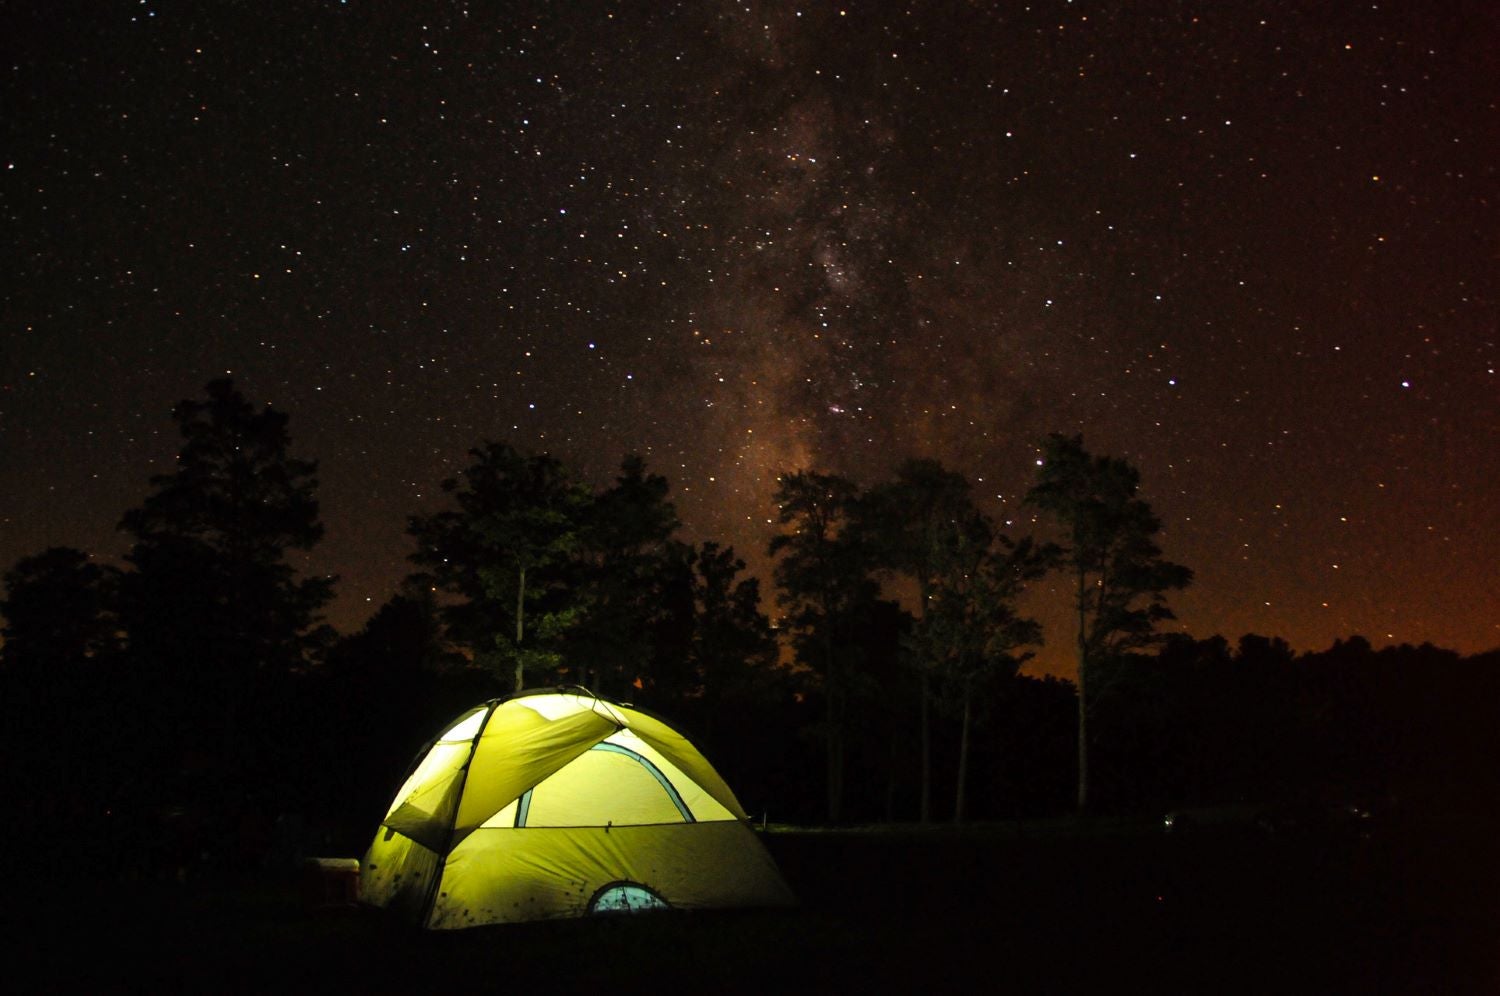 A tent is illuminated beneath the night sky.